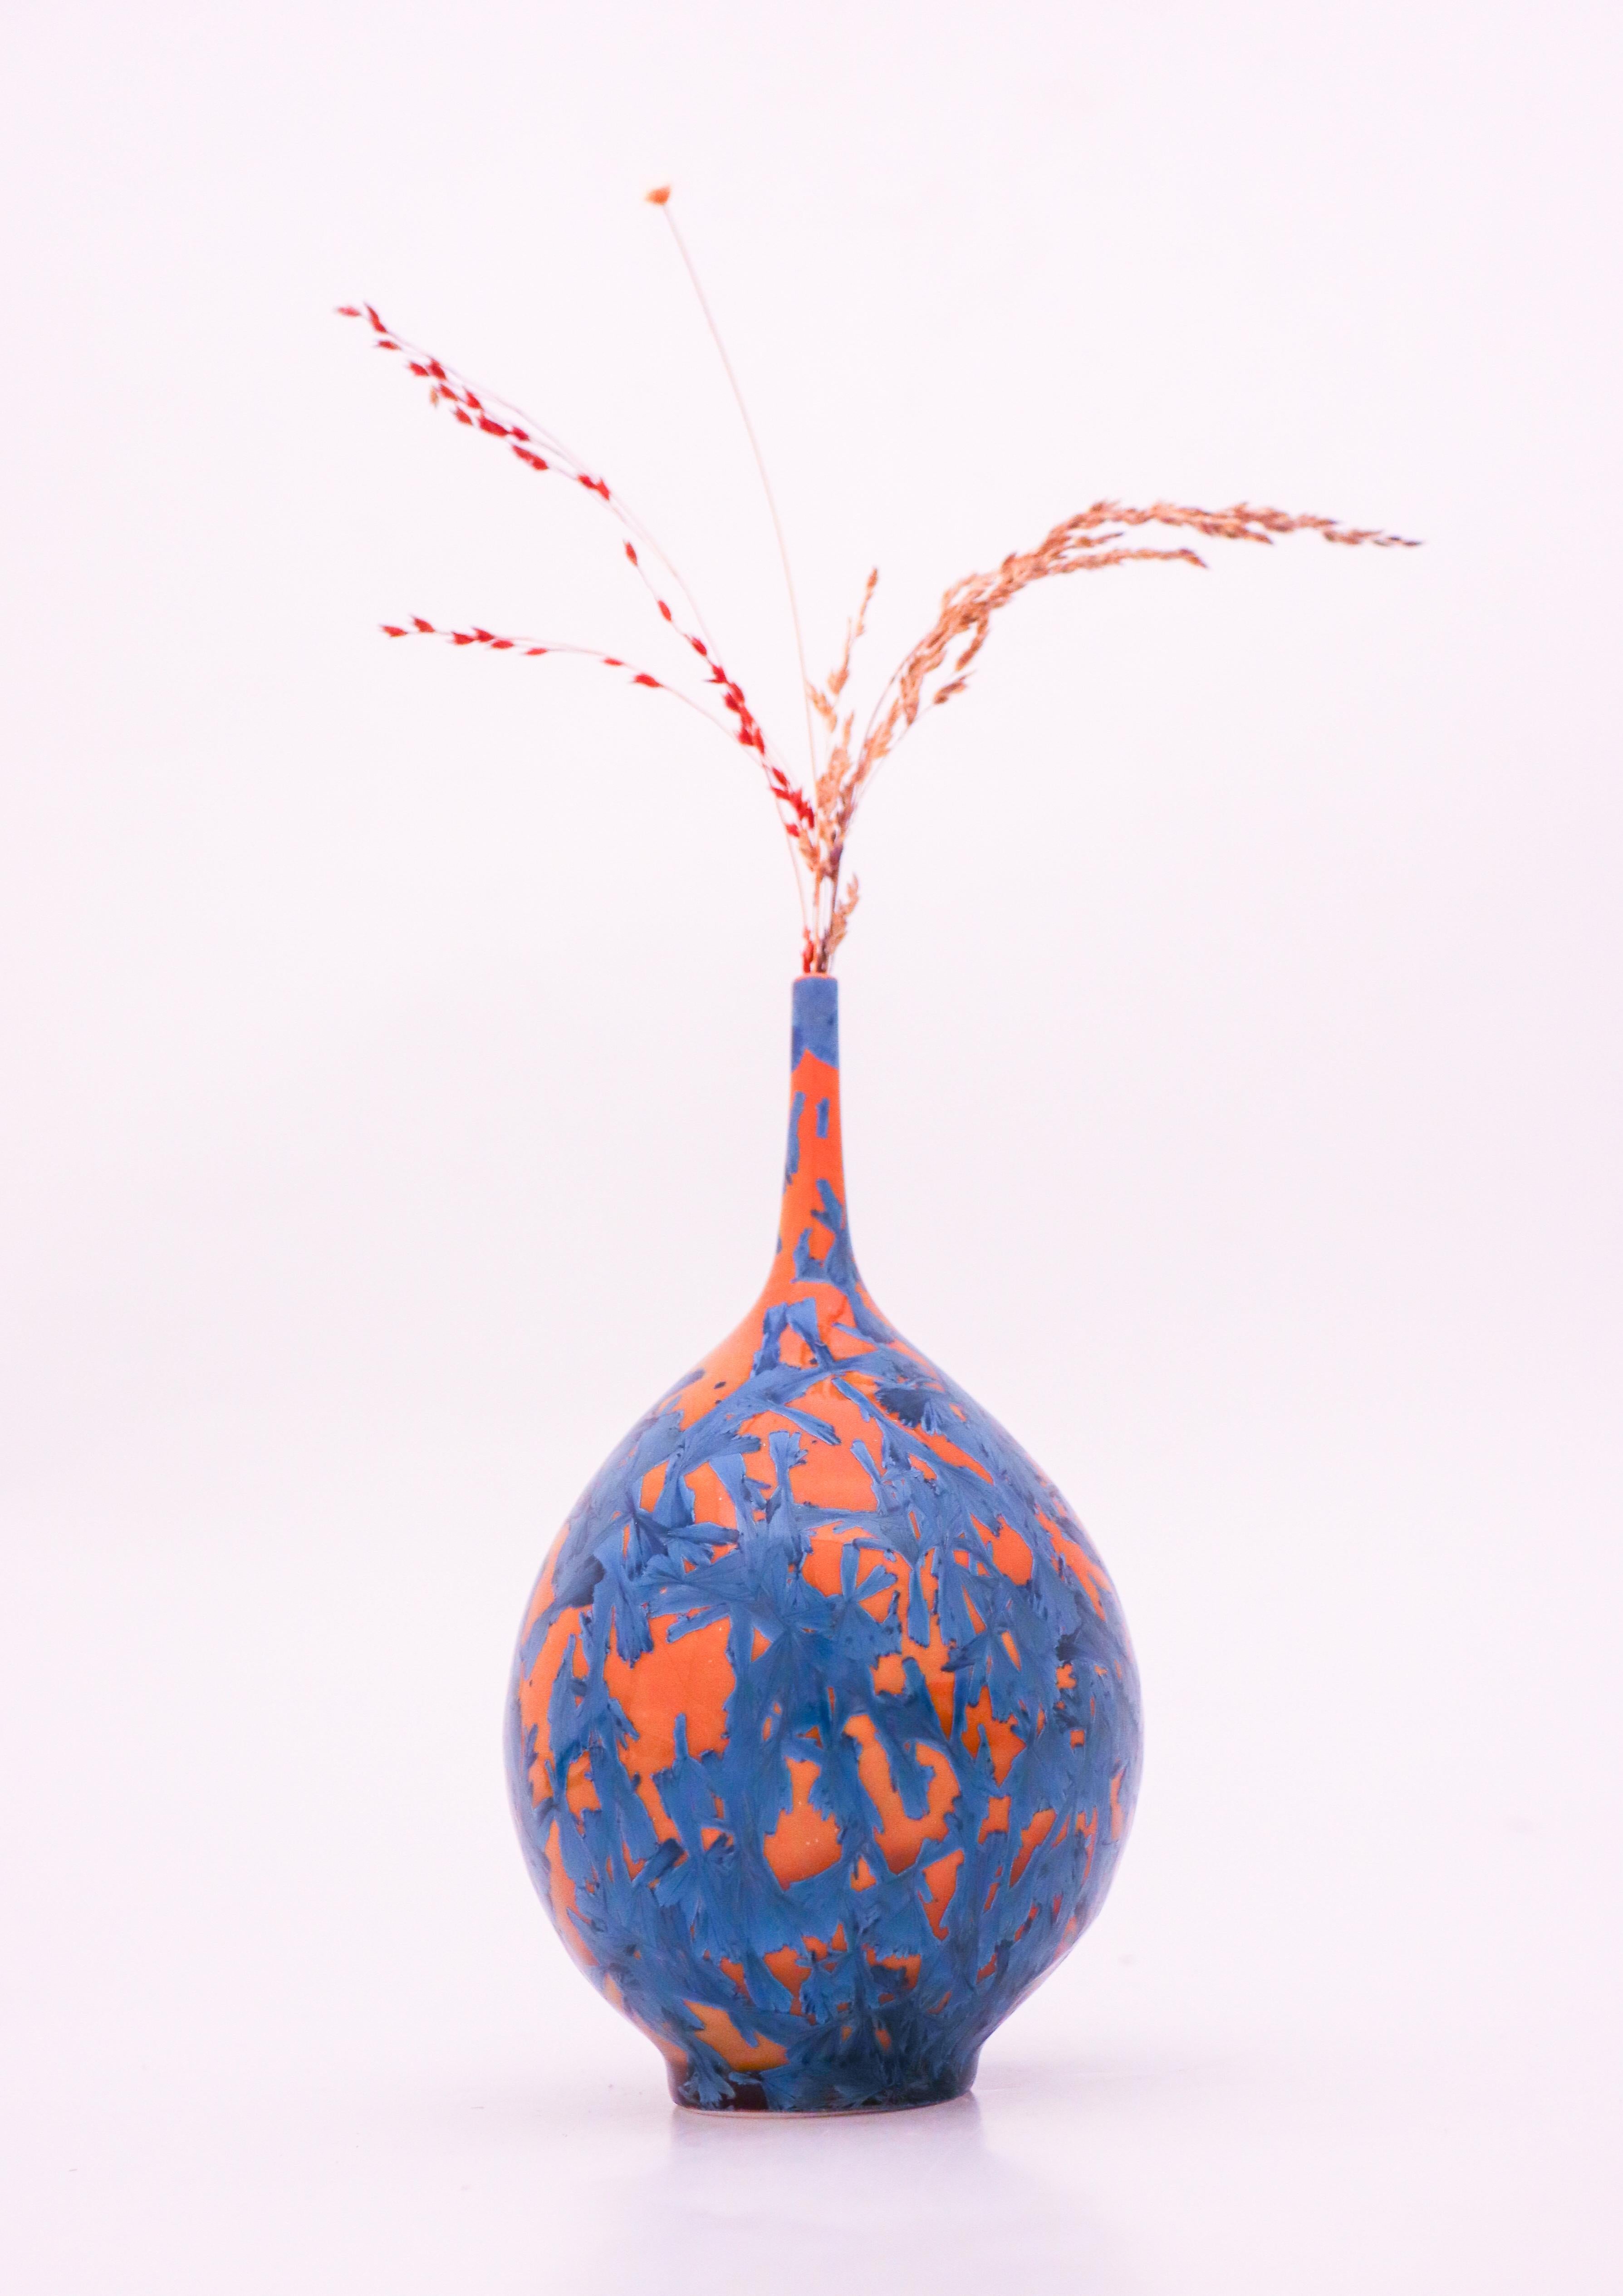 Suédois Isak Isaksson Vase en céramique orange / bleu émail cristallin Artiste contemporain en vente